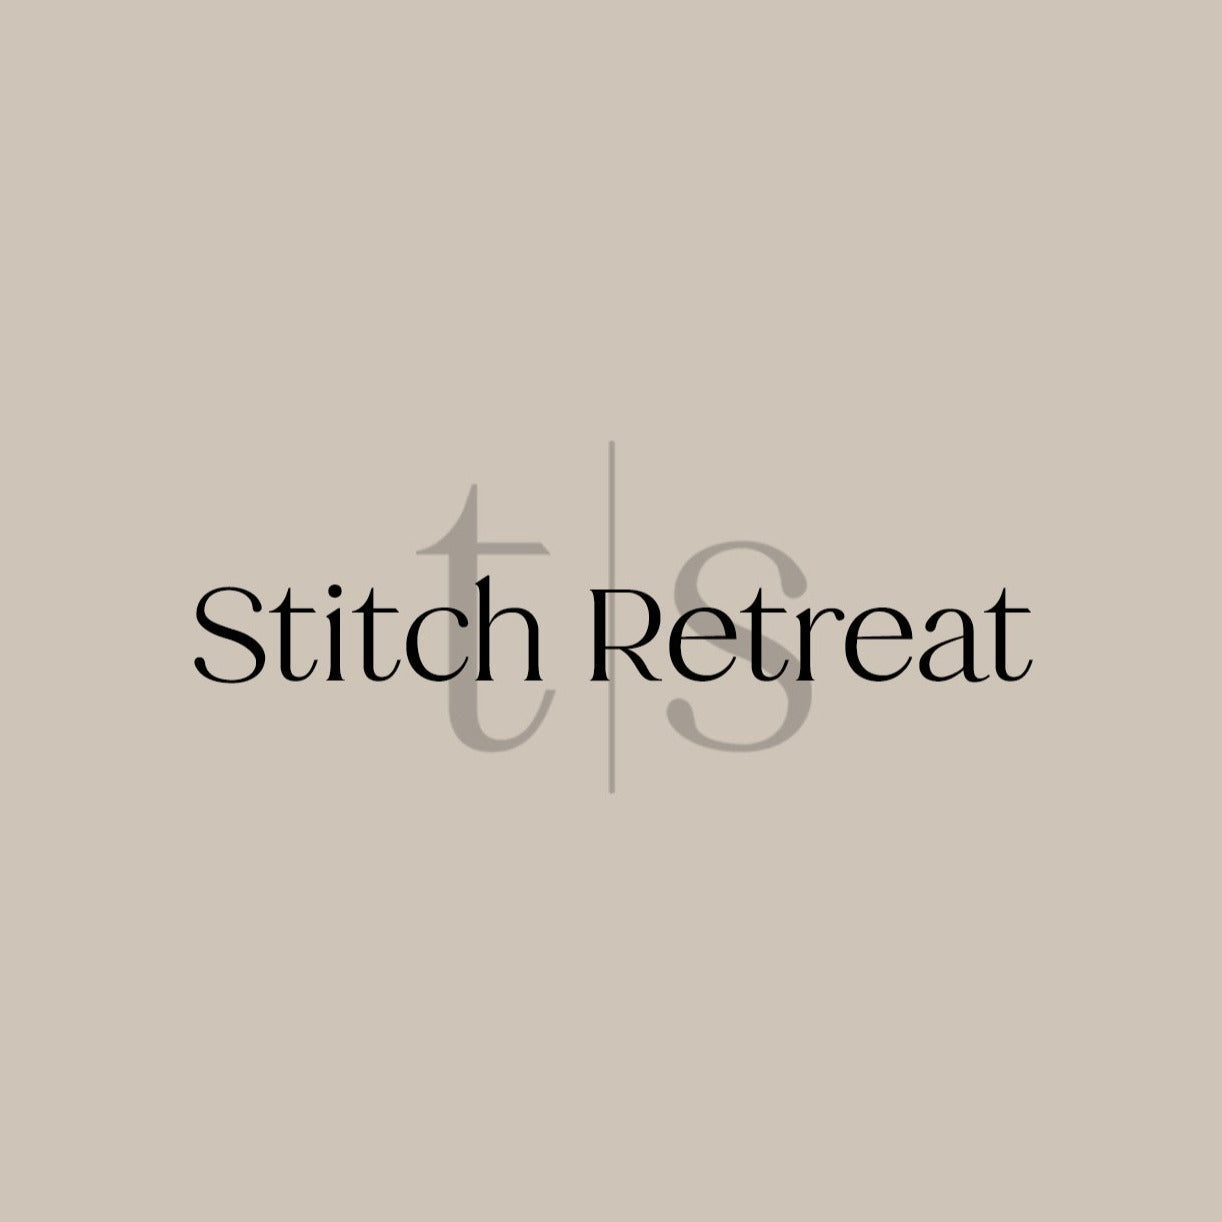 Stitch Retreat | Dec 1 - 2